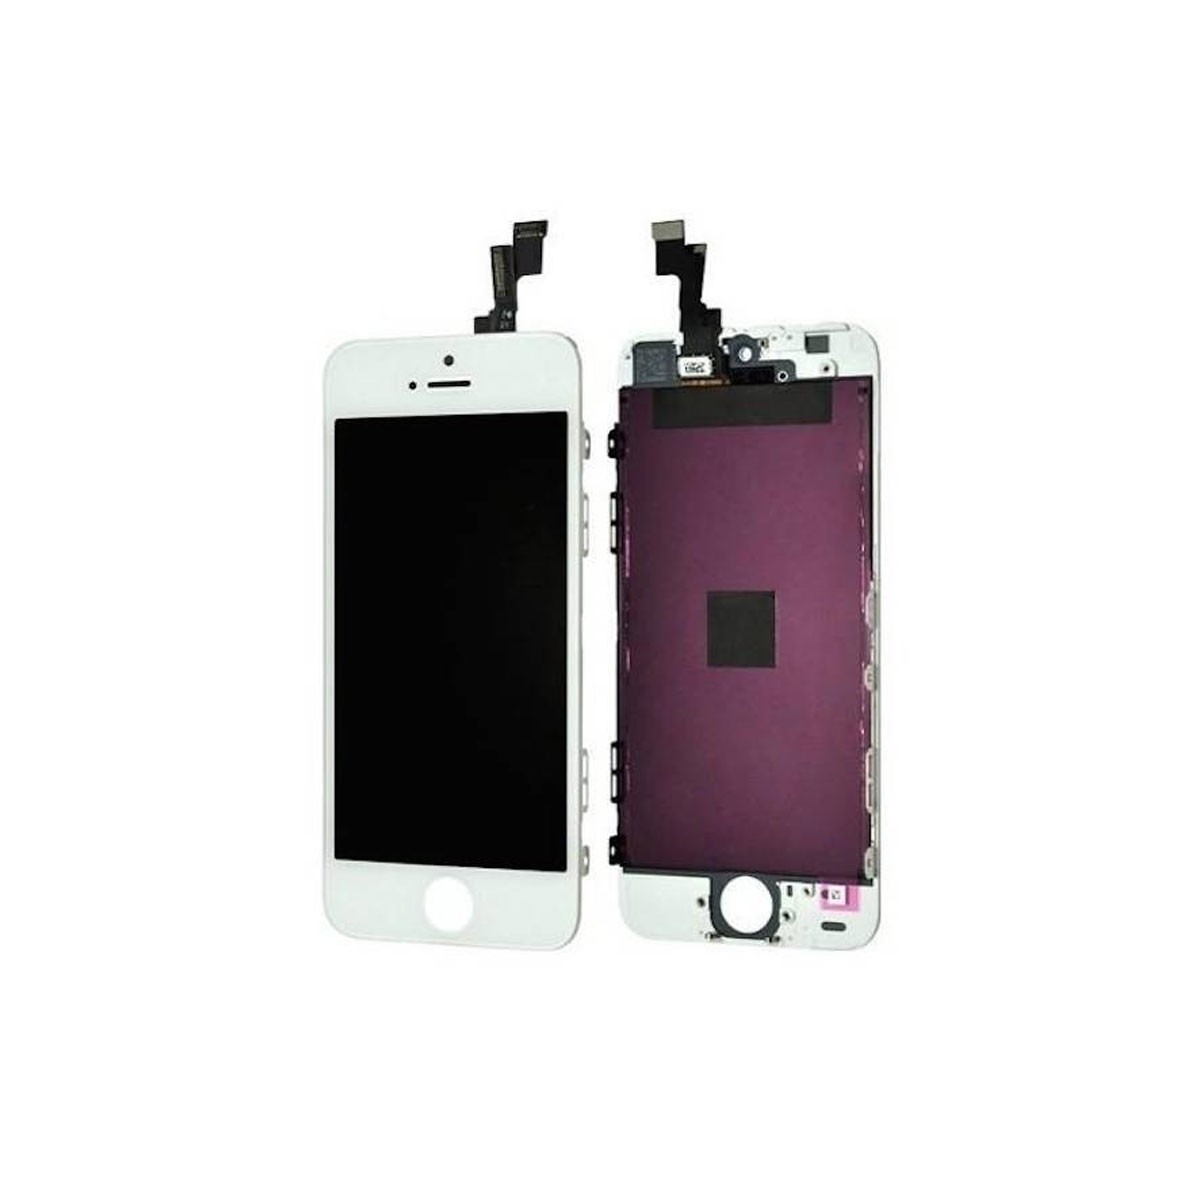 Pantalla digitalizadora completa, retina Display (LCD), ventana táctil, para iPhone 5s en color blanca